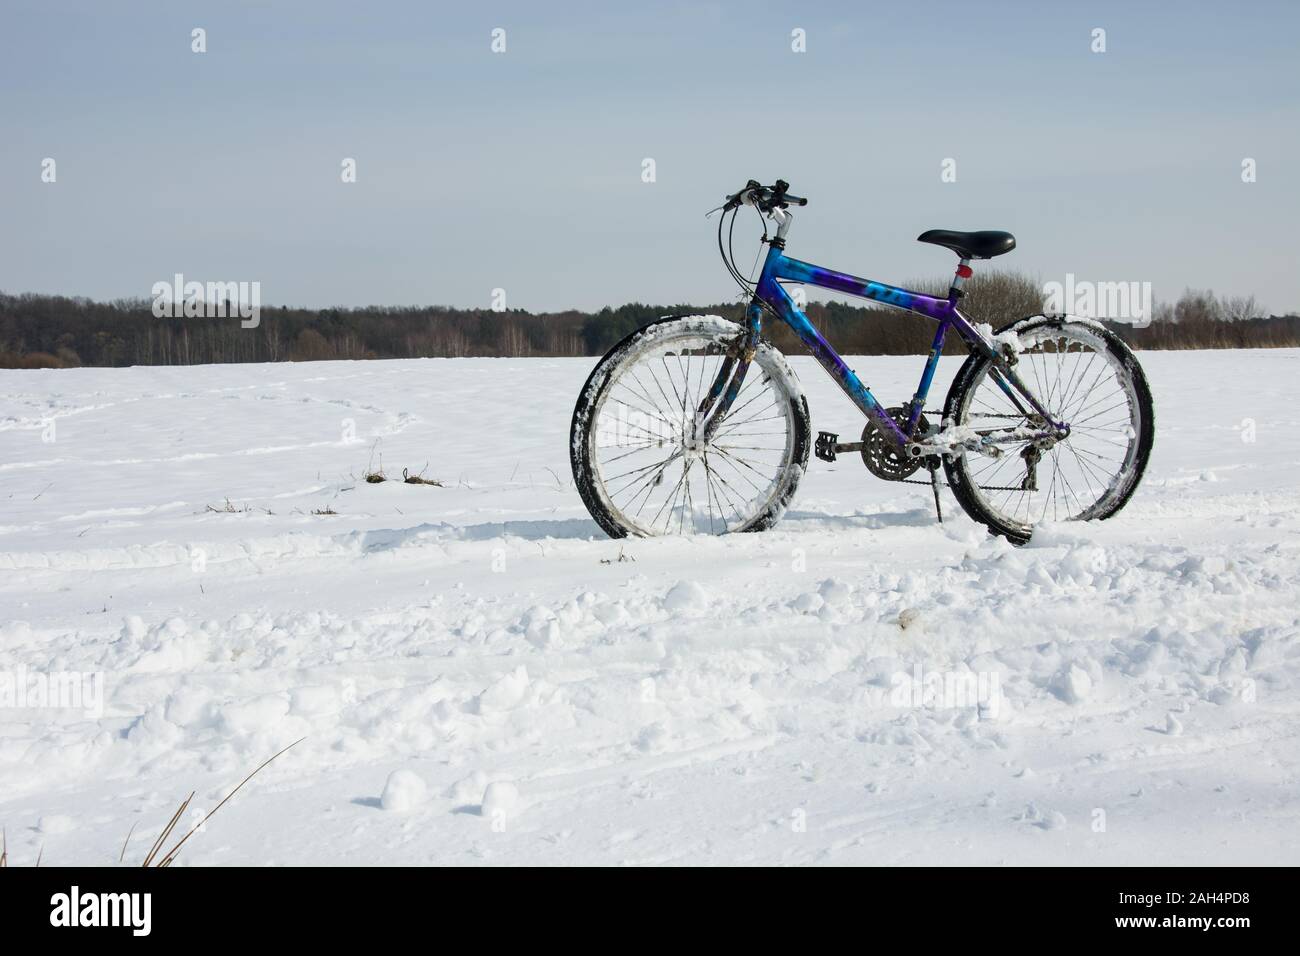 Colorful bike on a snowy field, winter sport Stock Photo